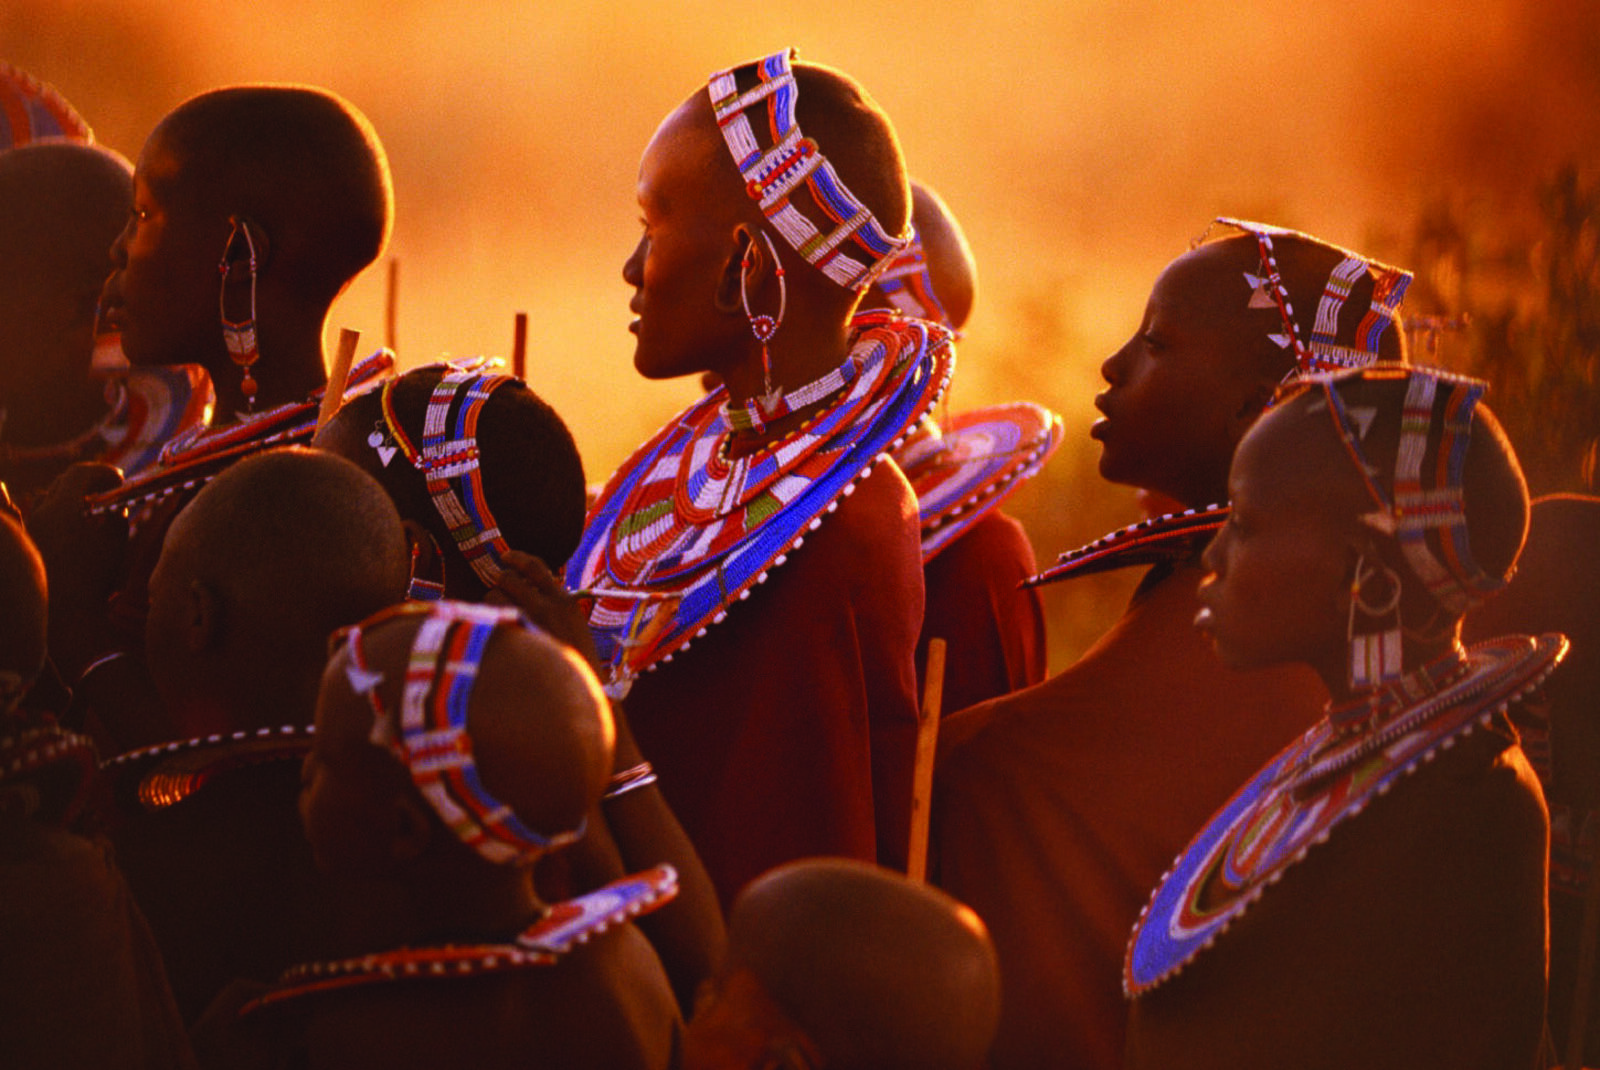 The Maasai people in the East African savanna